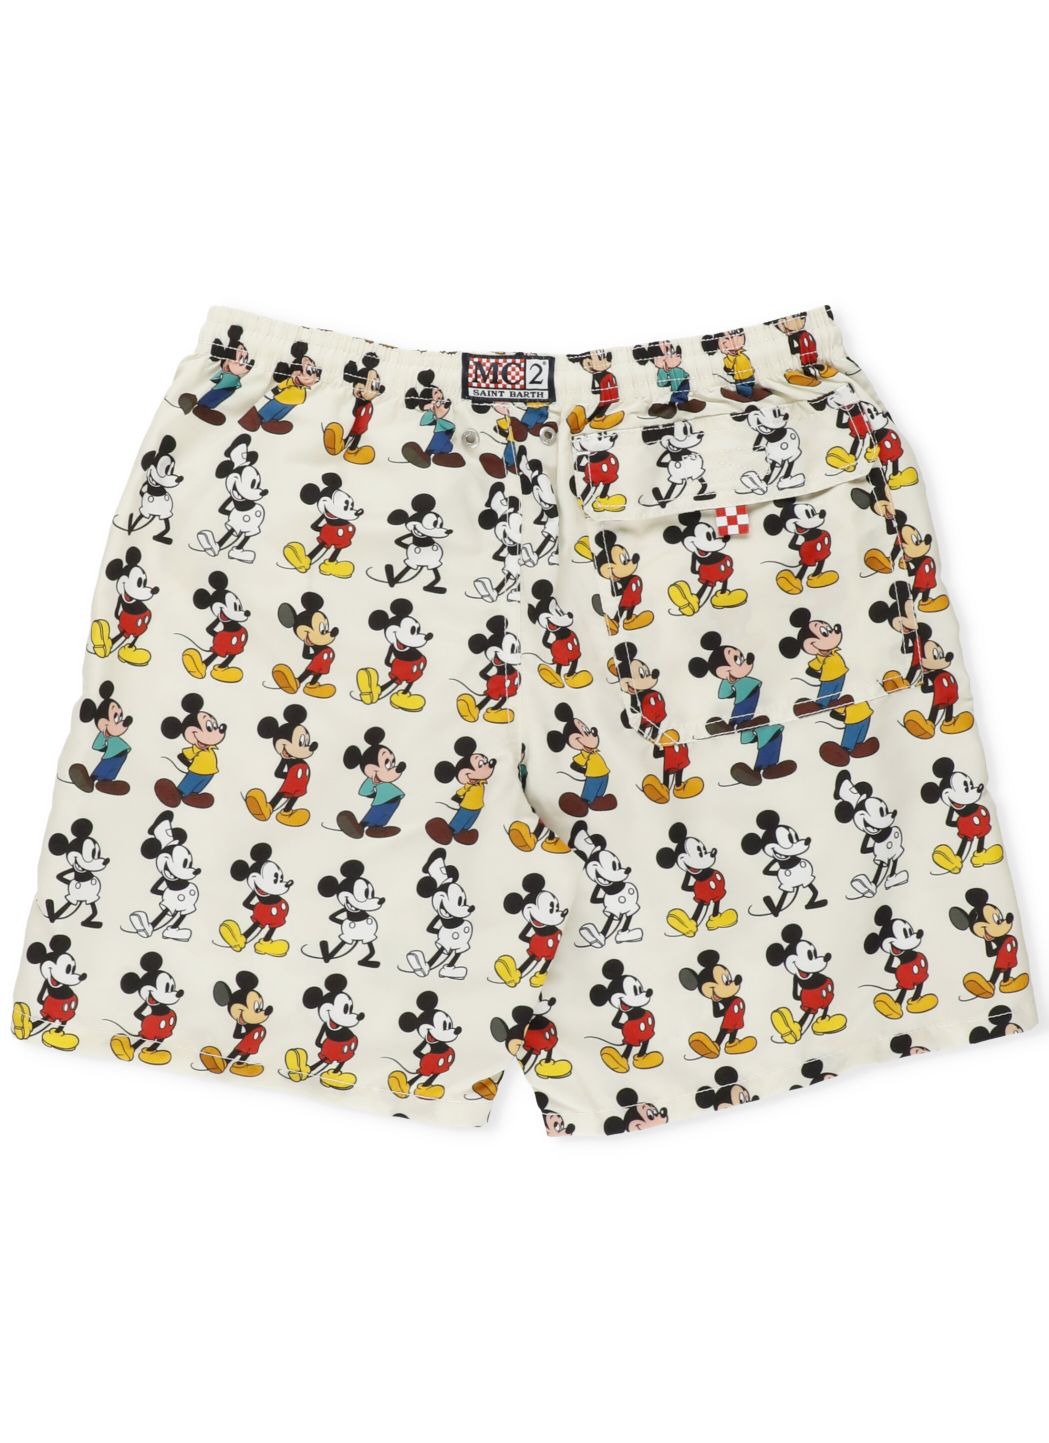 Mickey printed trunks